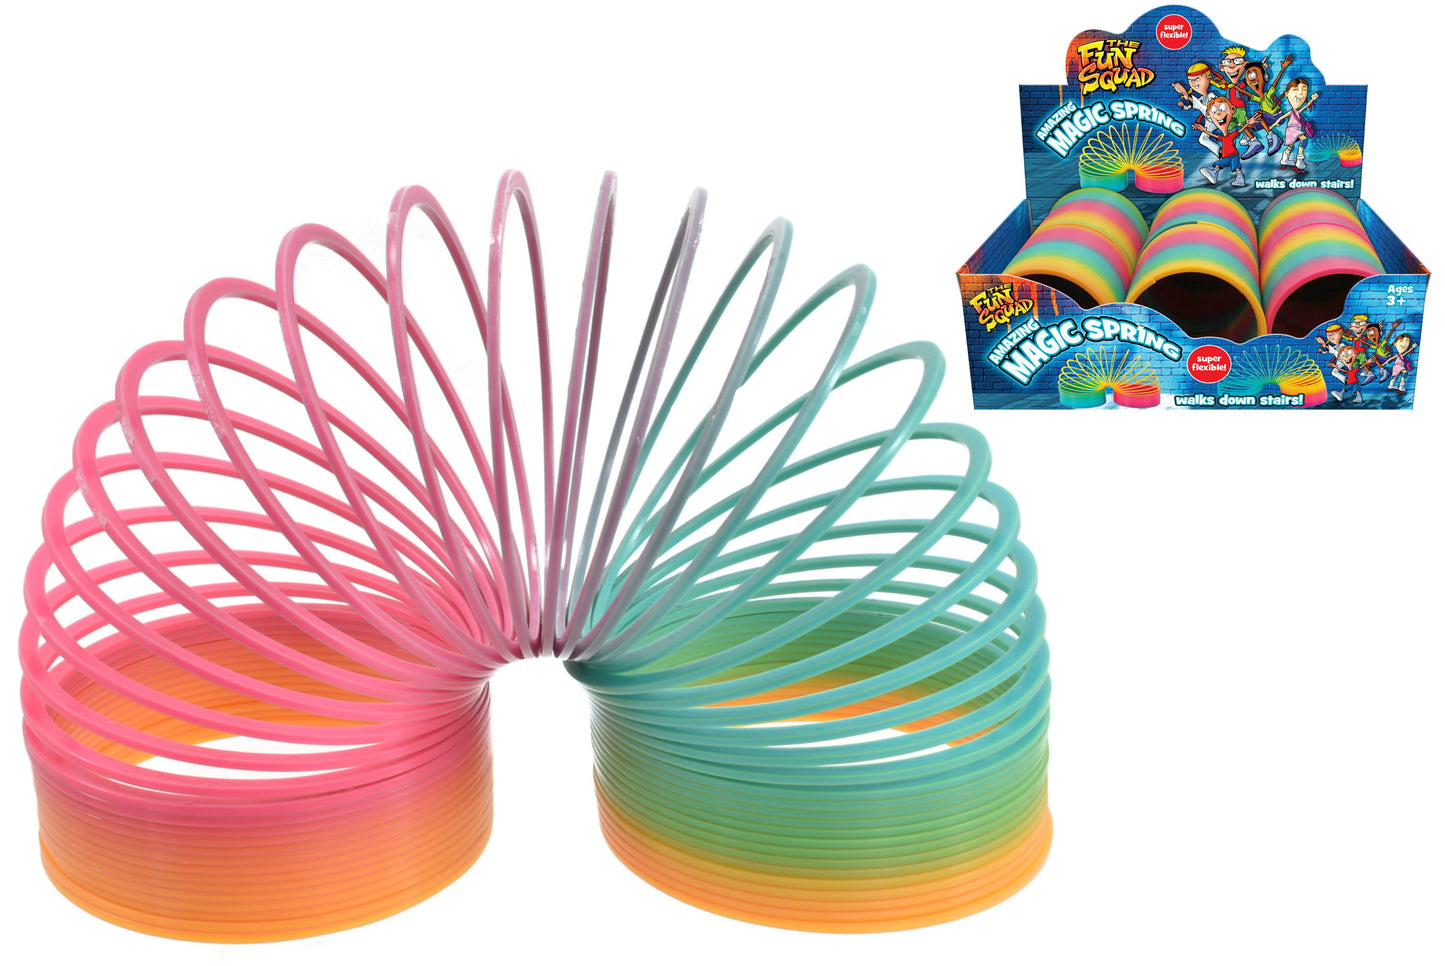 XL 10cm Slinky - Rainbow Spring